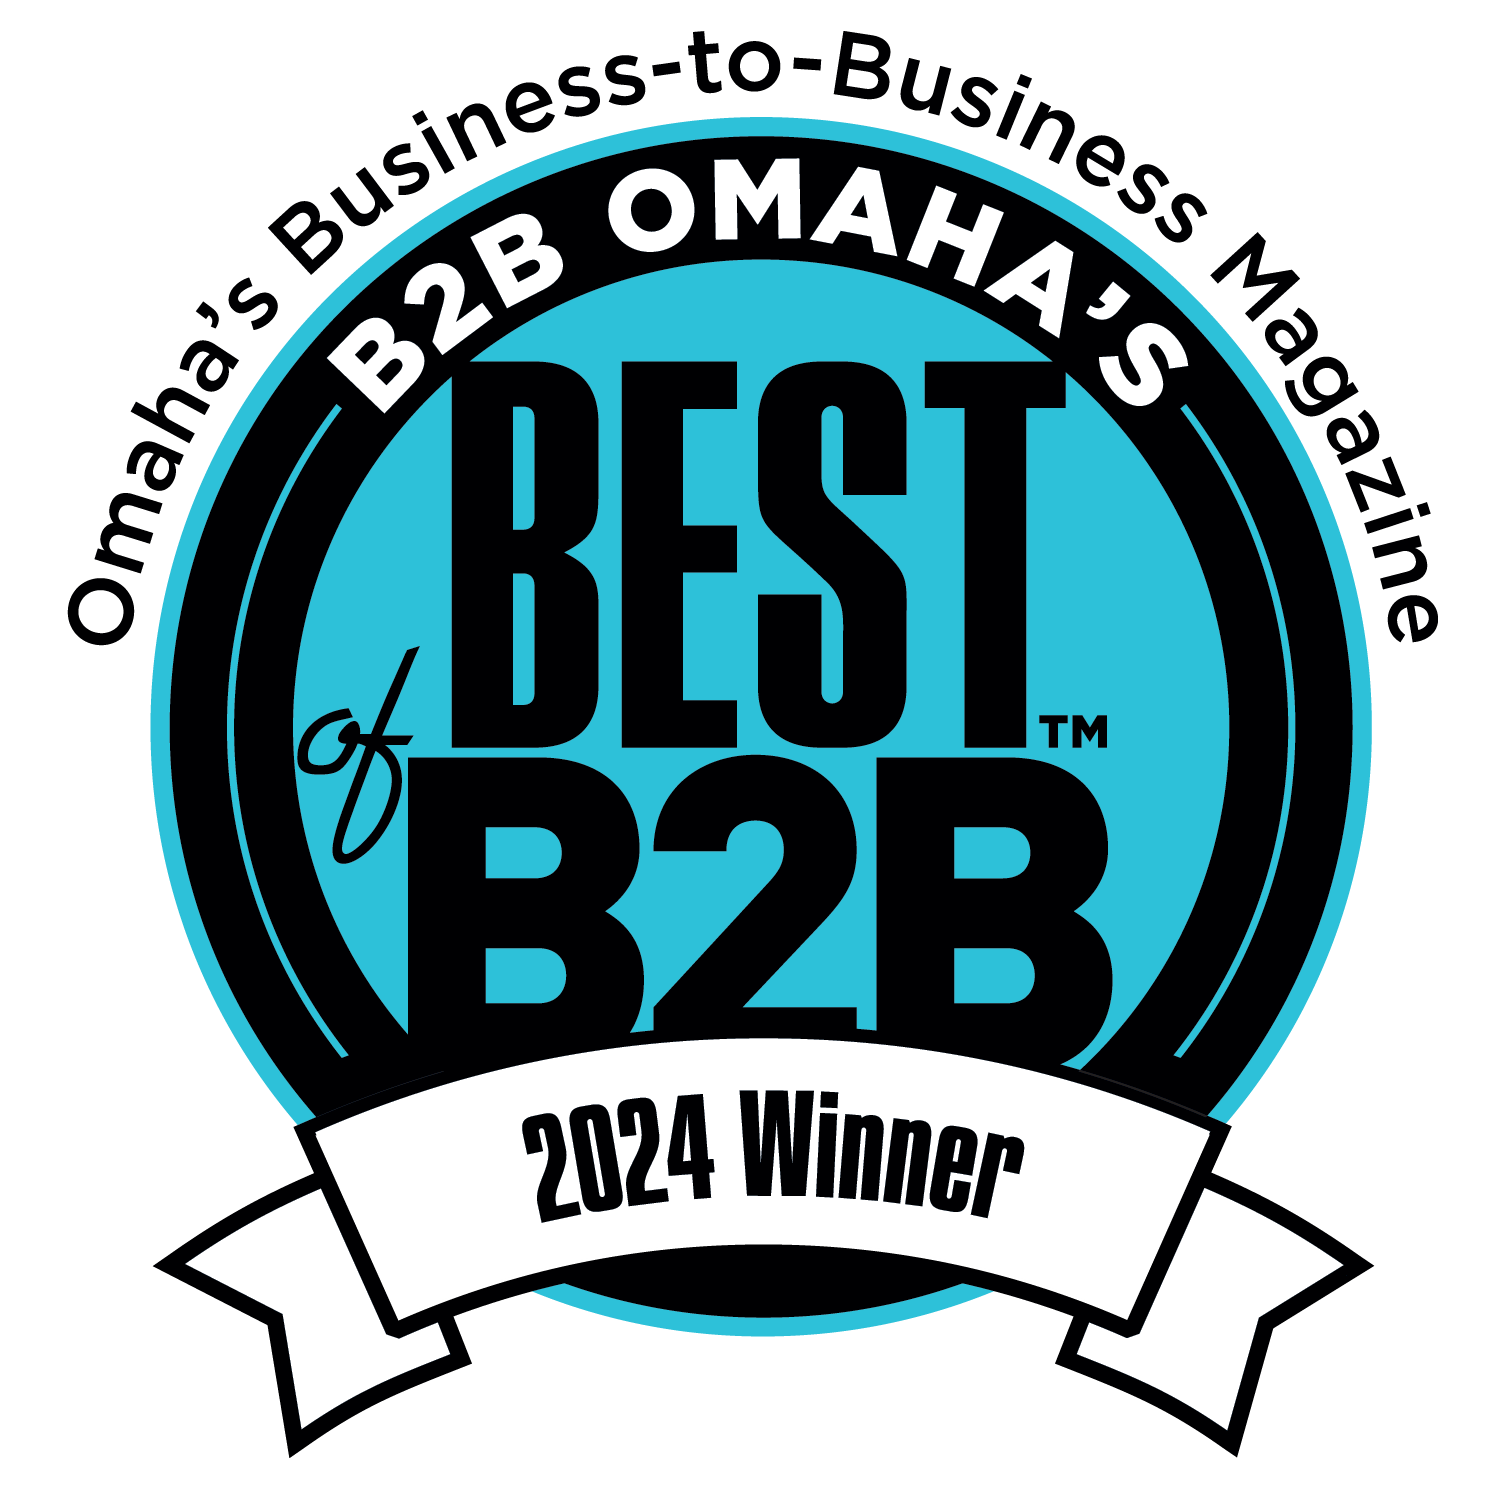 Omaha Best of B2B